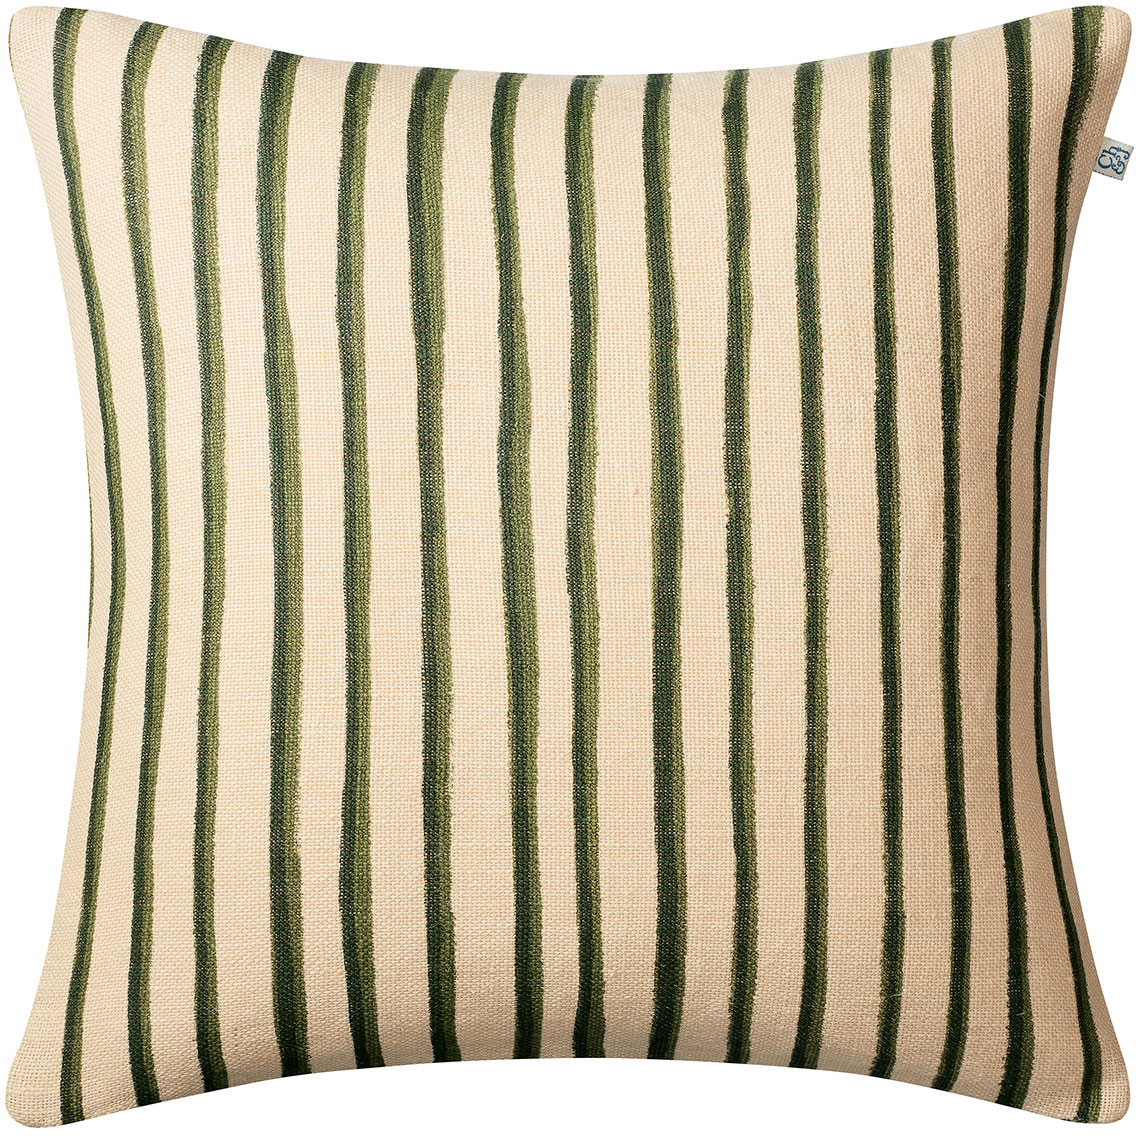 Jaipur Stripe Putetrekk 50x50 cm, Light Beige / Cactus Green / Green